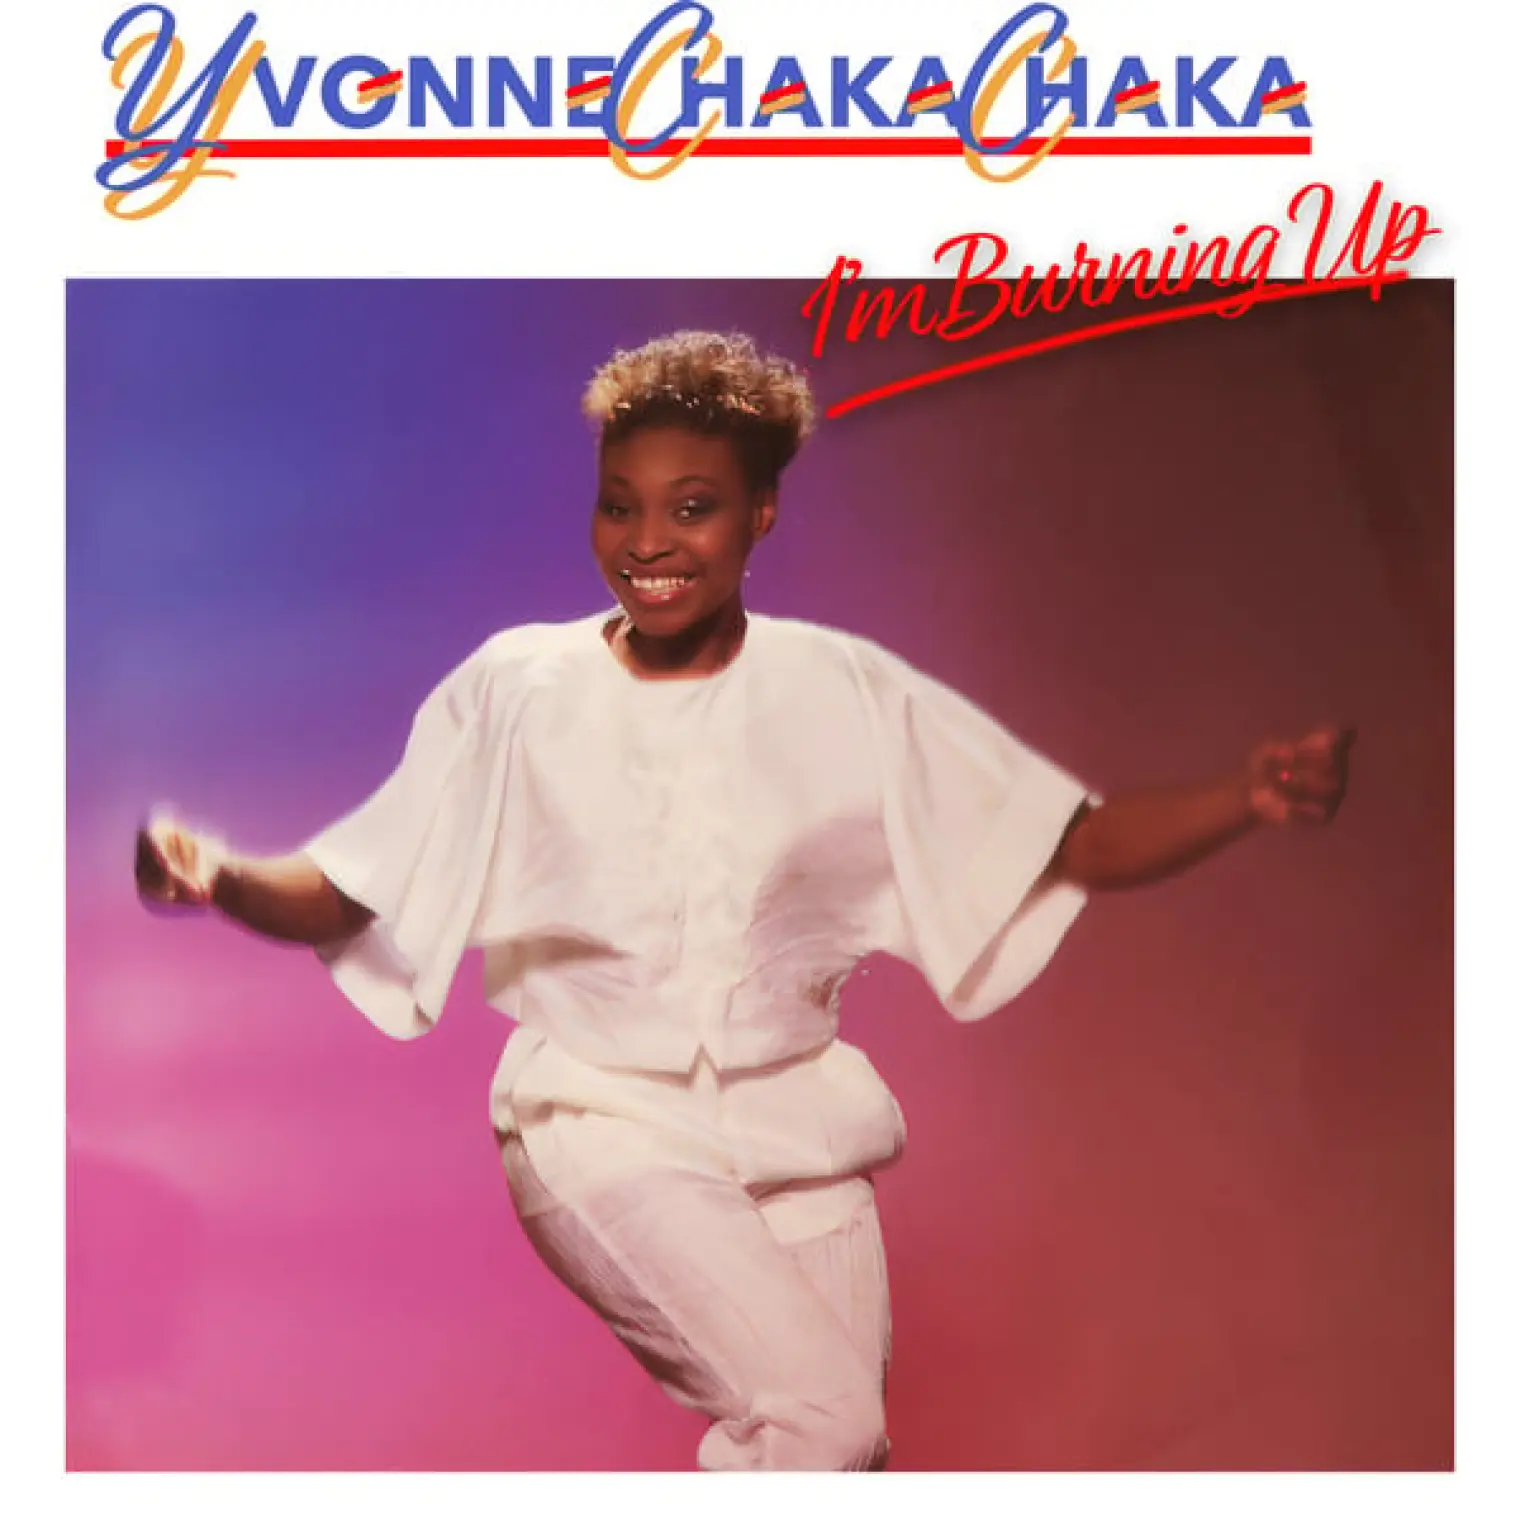 I'm Burning Up -  Yvonne Chaka Chaka 